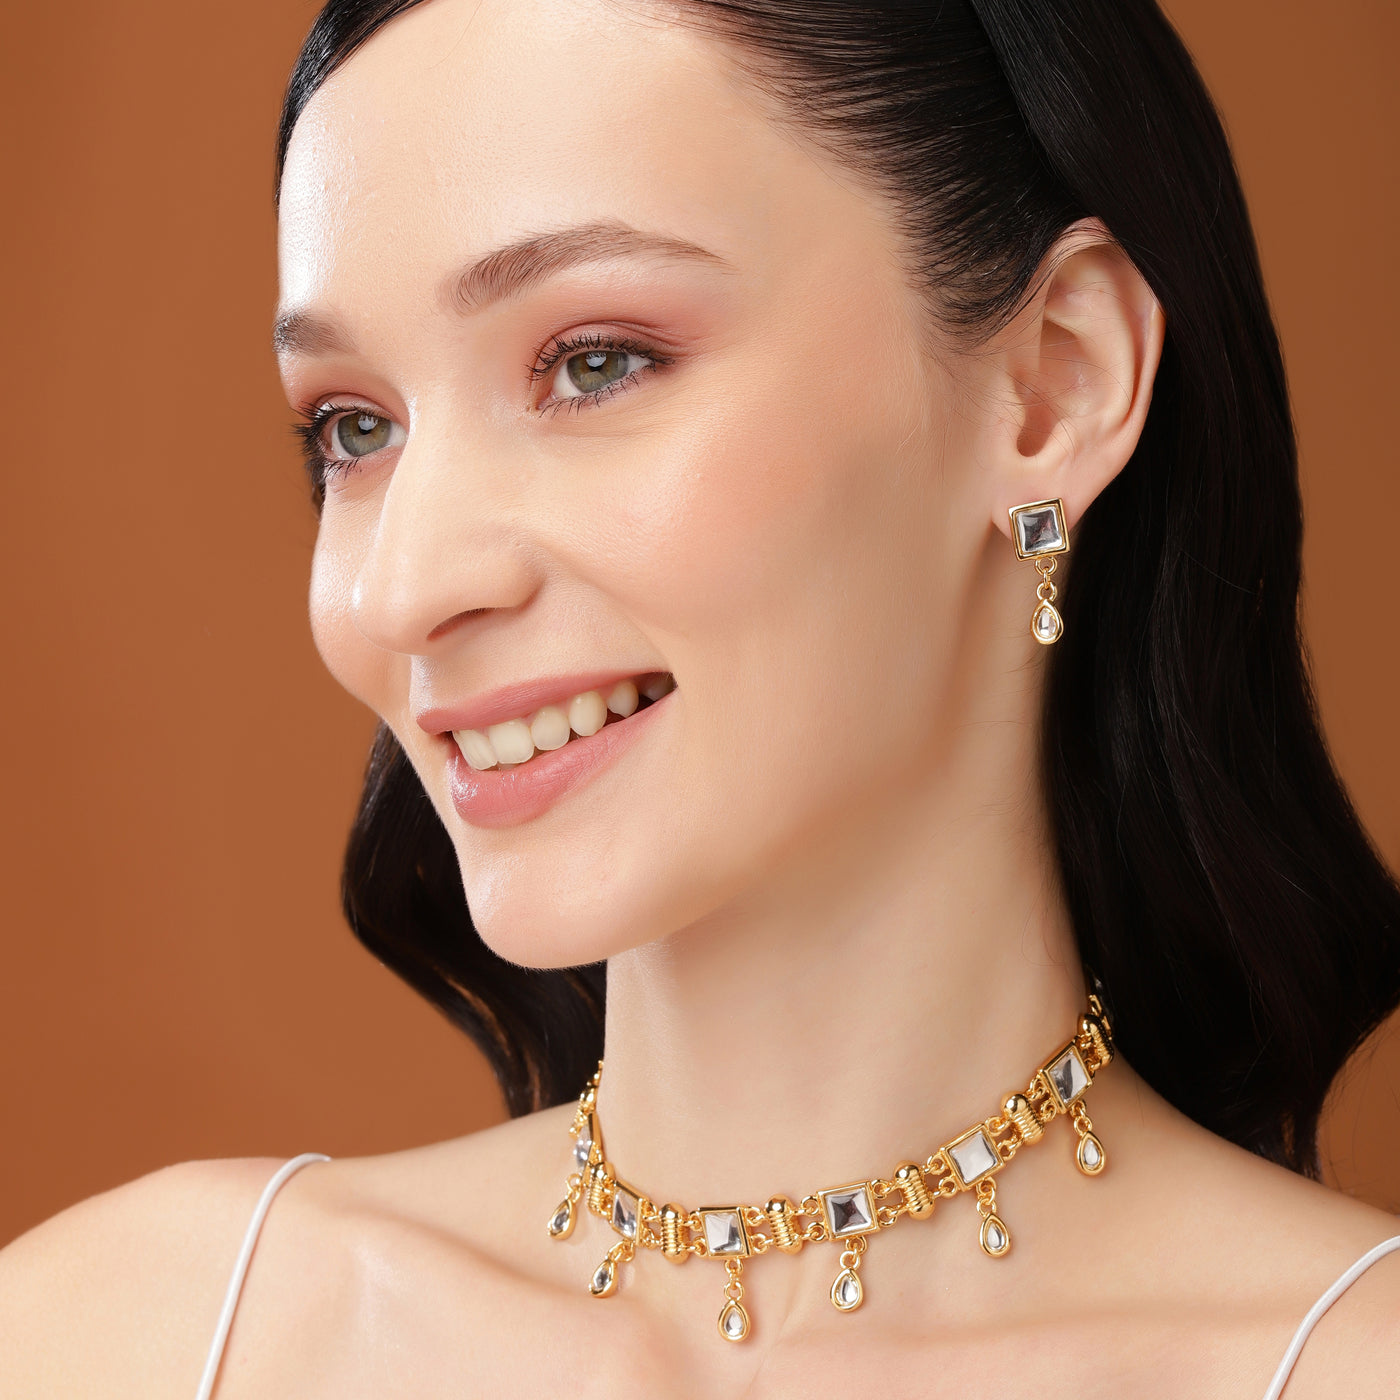 Estele Gold Plated Fascinating Necklace Set for Women